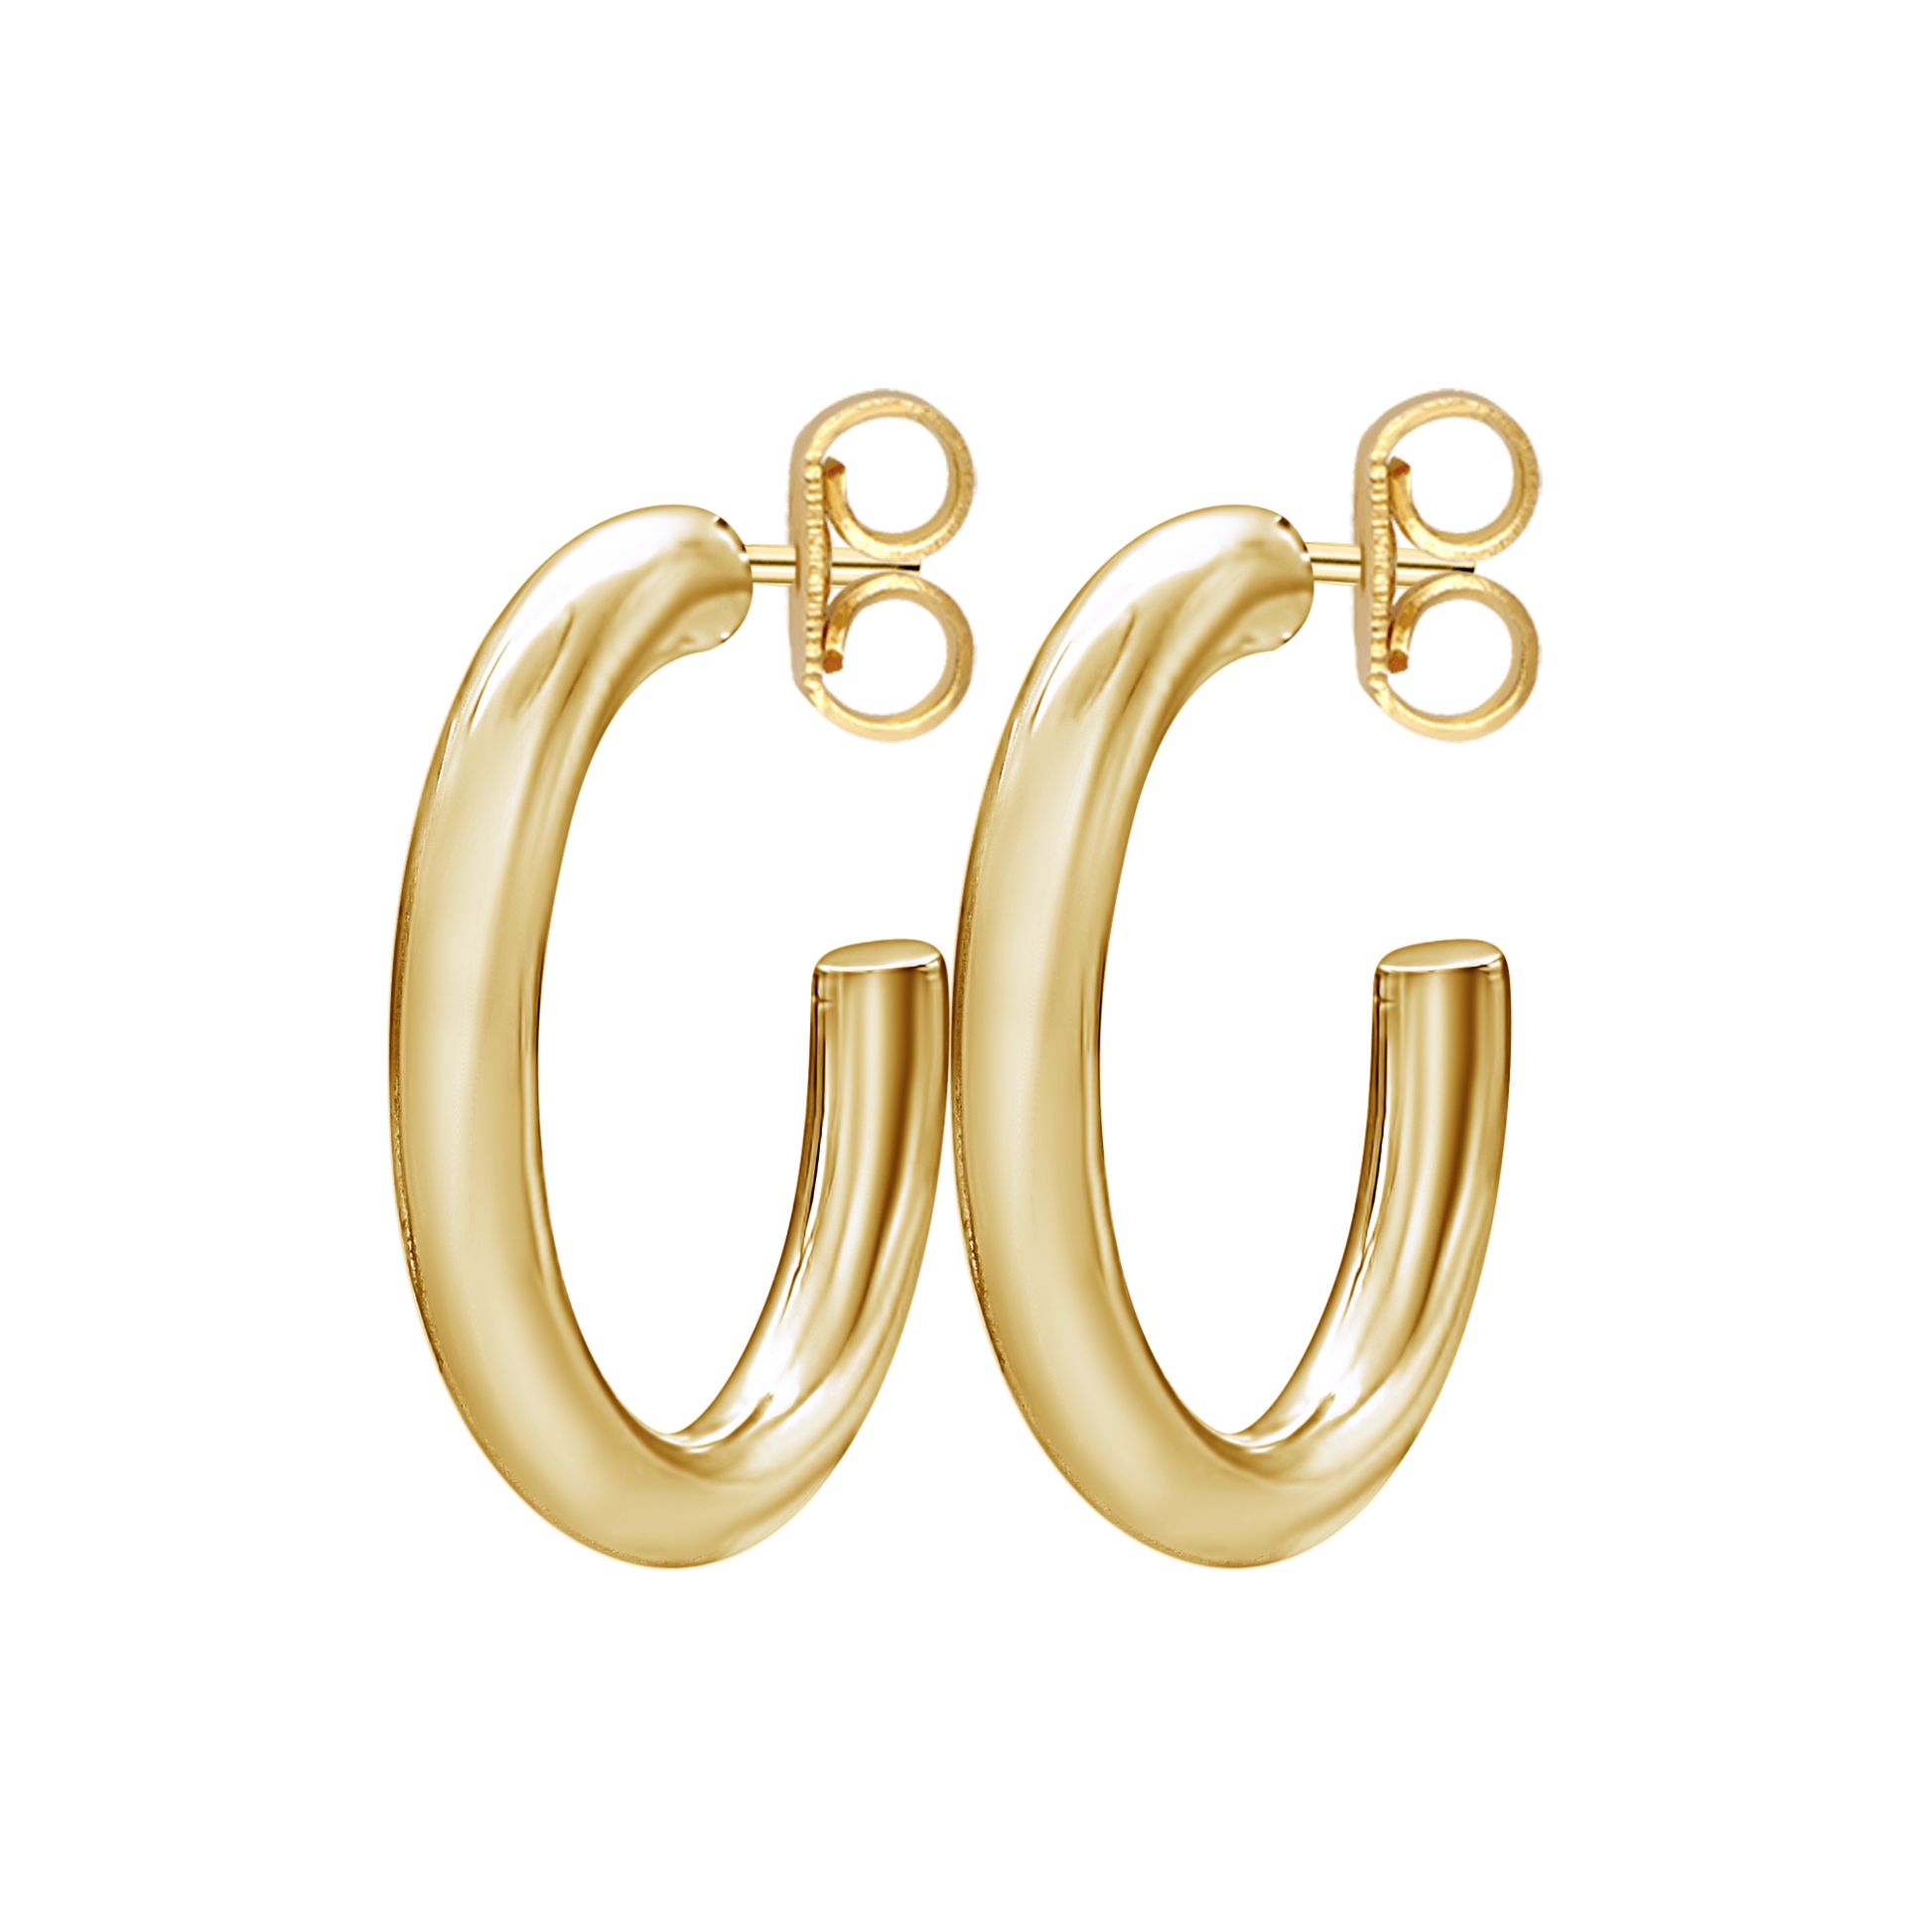 Set of gold hoop earrings on white background